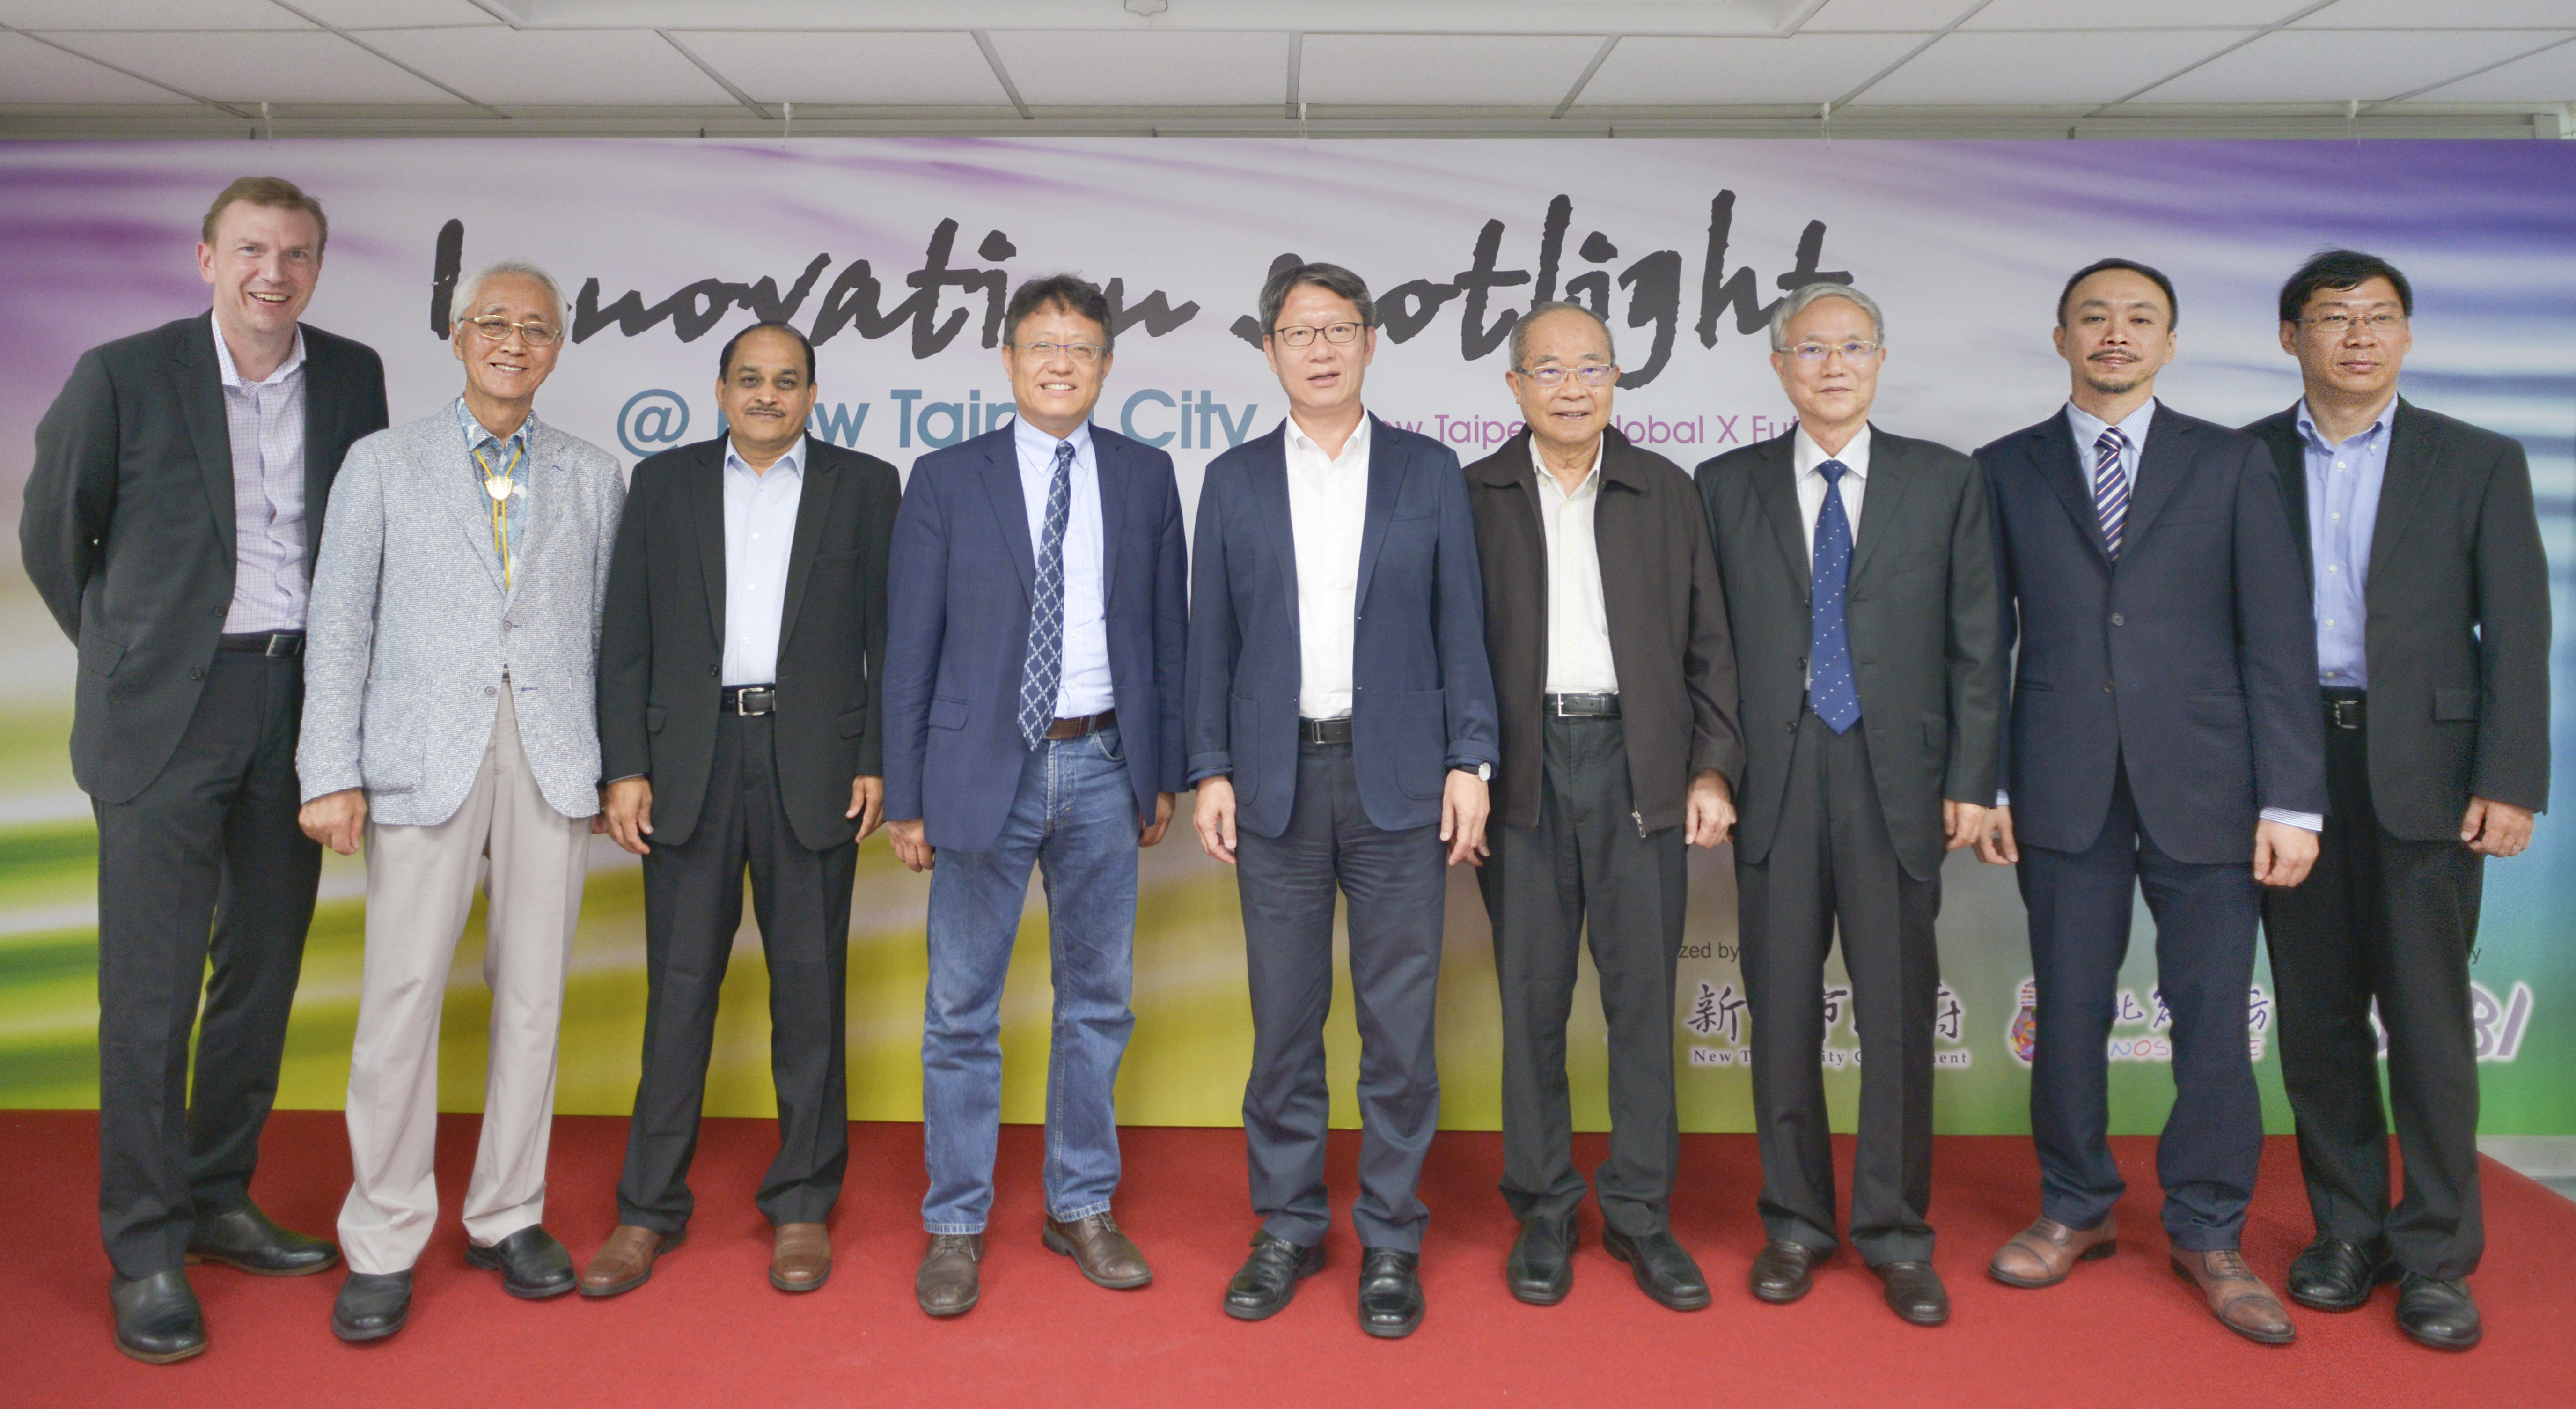 「Innovation spotlight @ New Taipei City」國際交流活動與會貴賓合影(左4：亞洲育成協會會長黃經堯、左5：新北市副市長葉惠青)